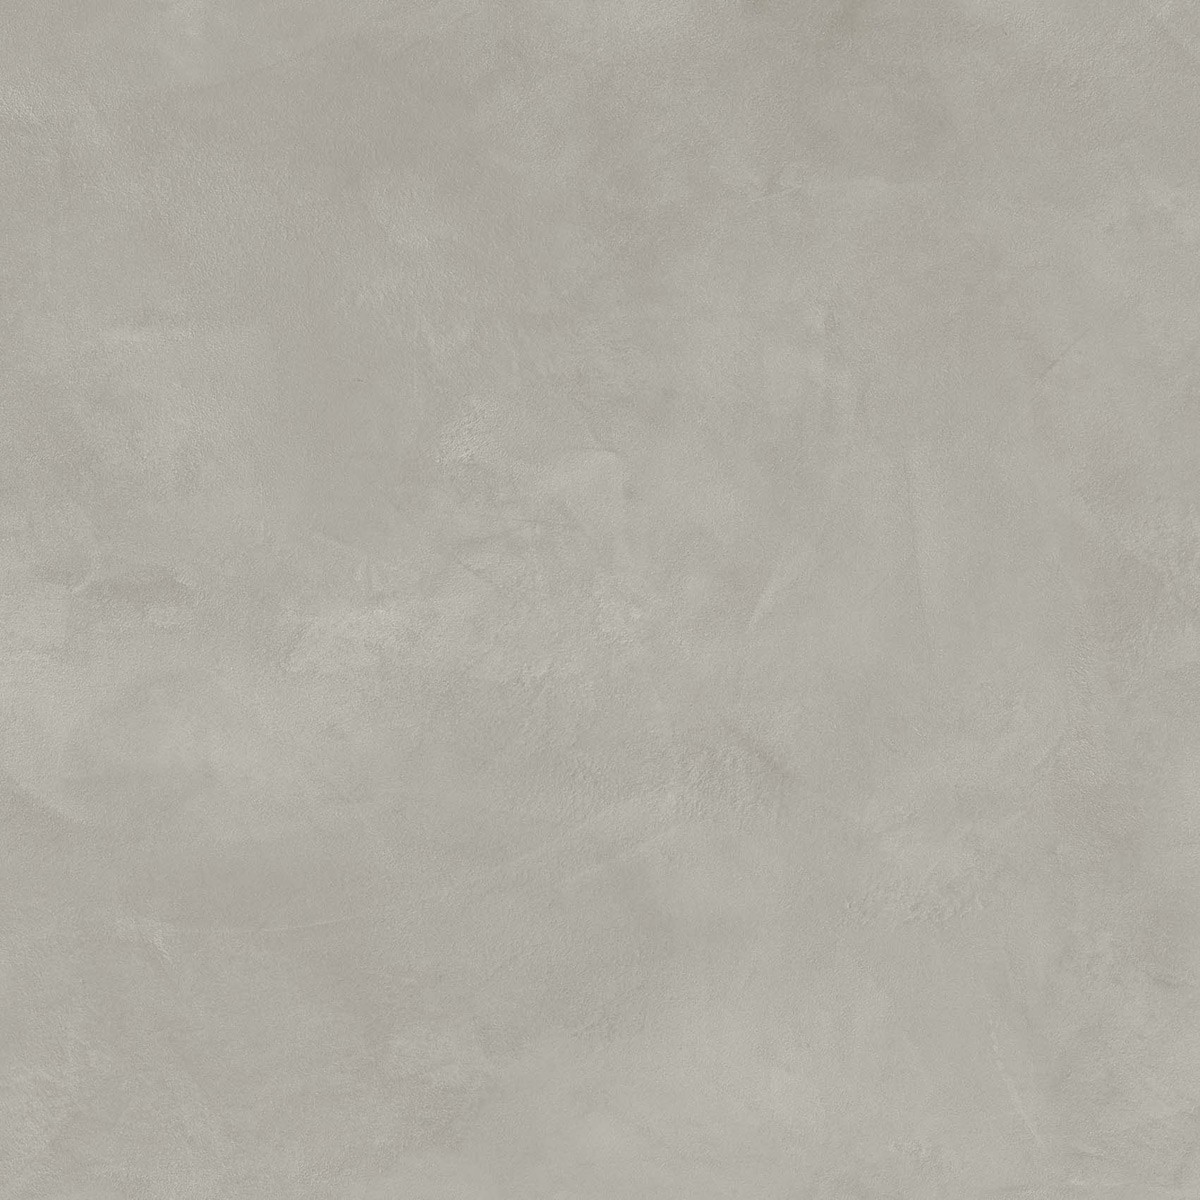 Carrelage Aspect béton  Marbella gris  60x60 cm